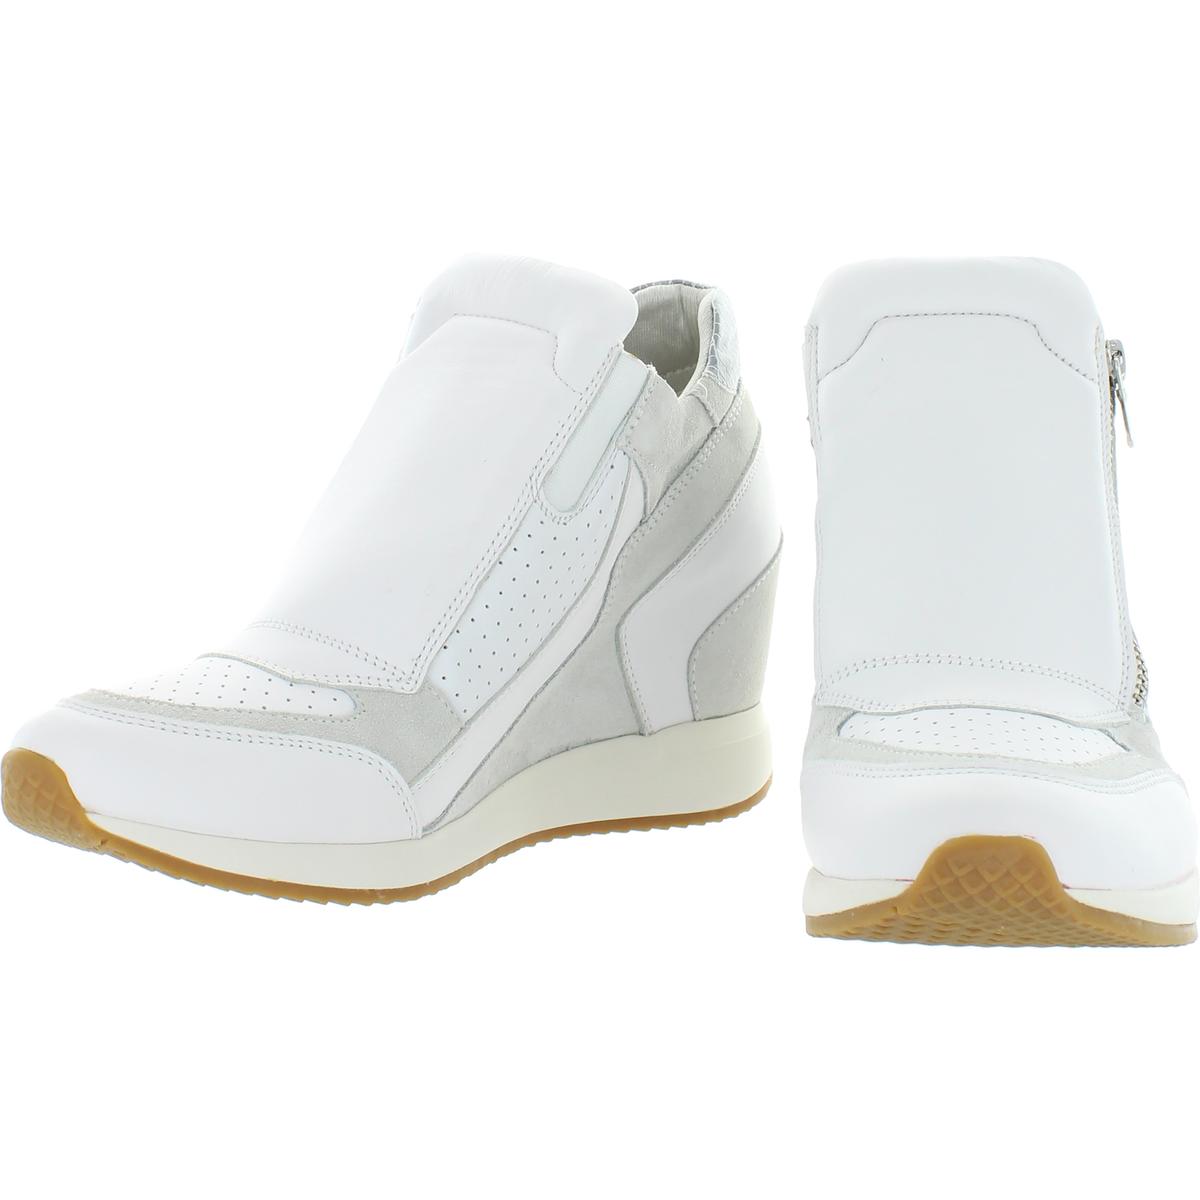 Geox Respira Womens Nydame Suede Slip On Heeled Wedge Sneaker Shoes BHFO 3484 | eBay